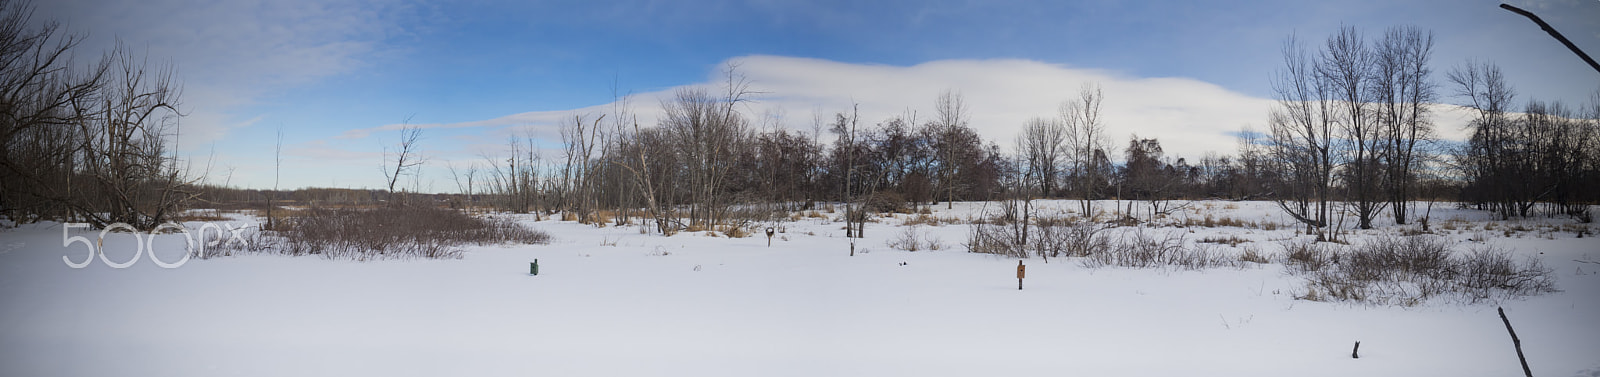 Olympus PEN E-PL5 sample photo. Winter landscape photography